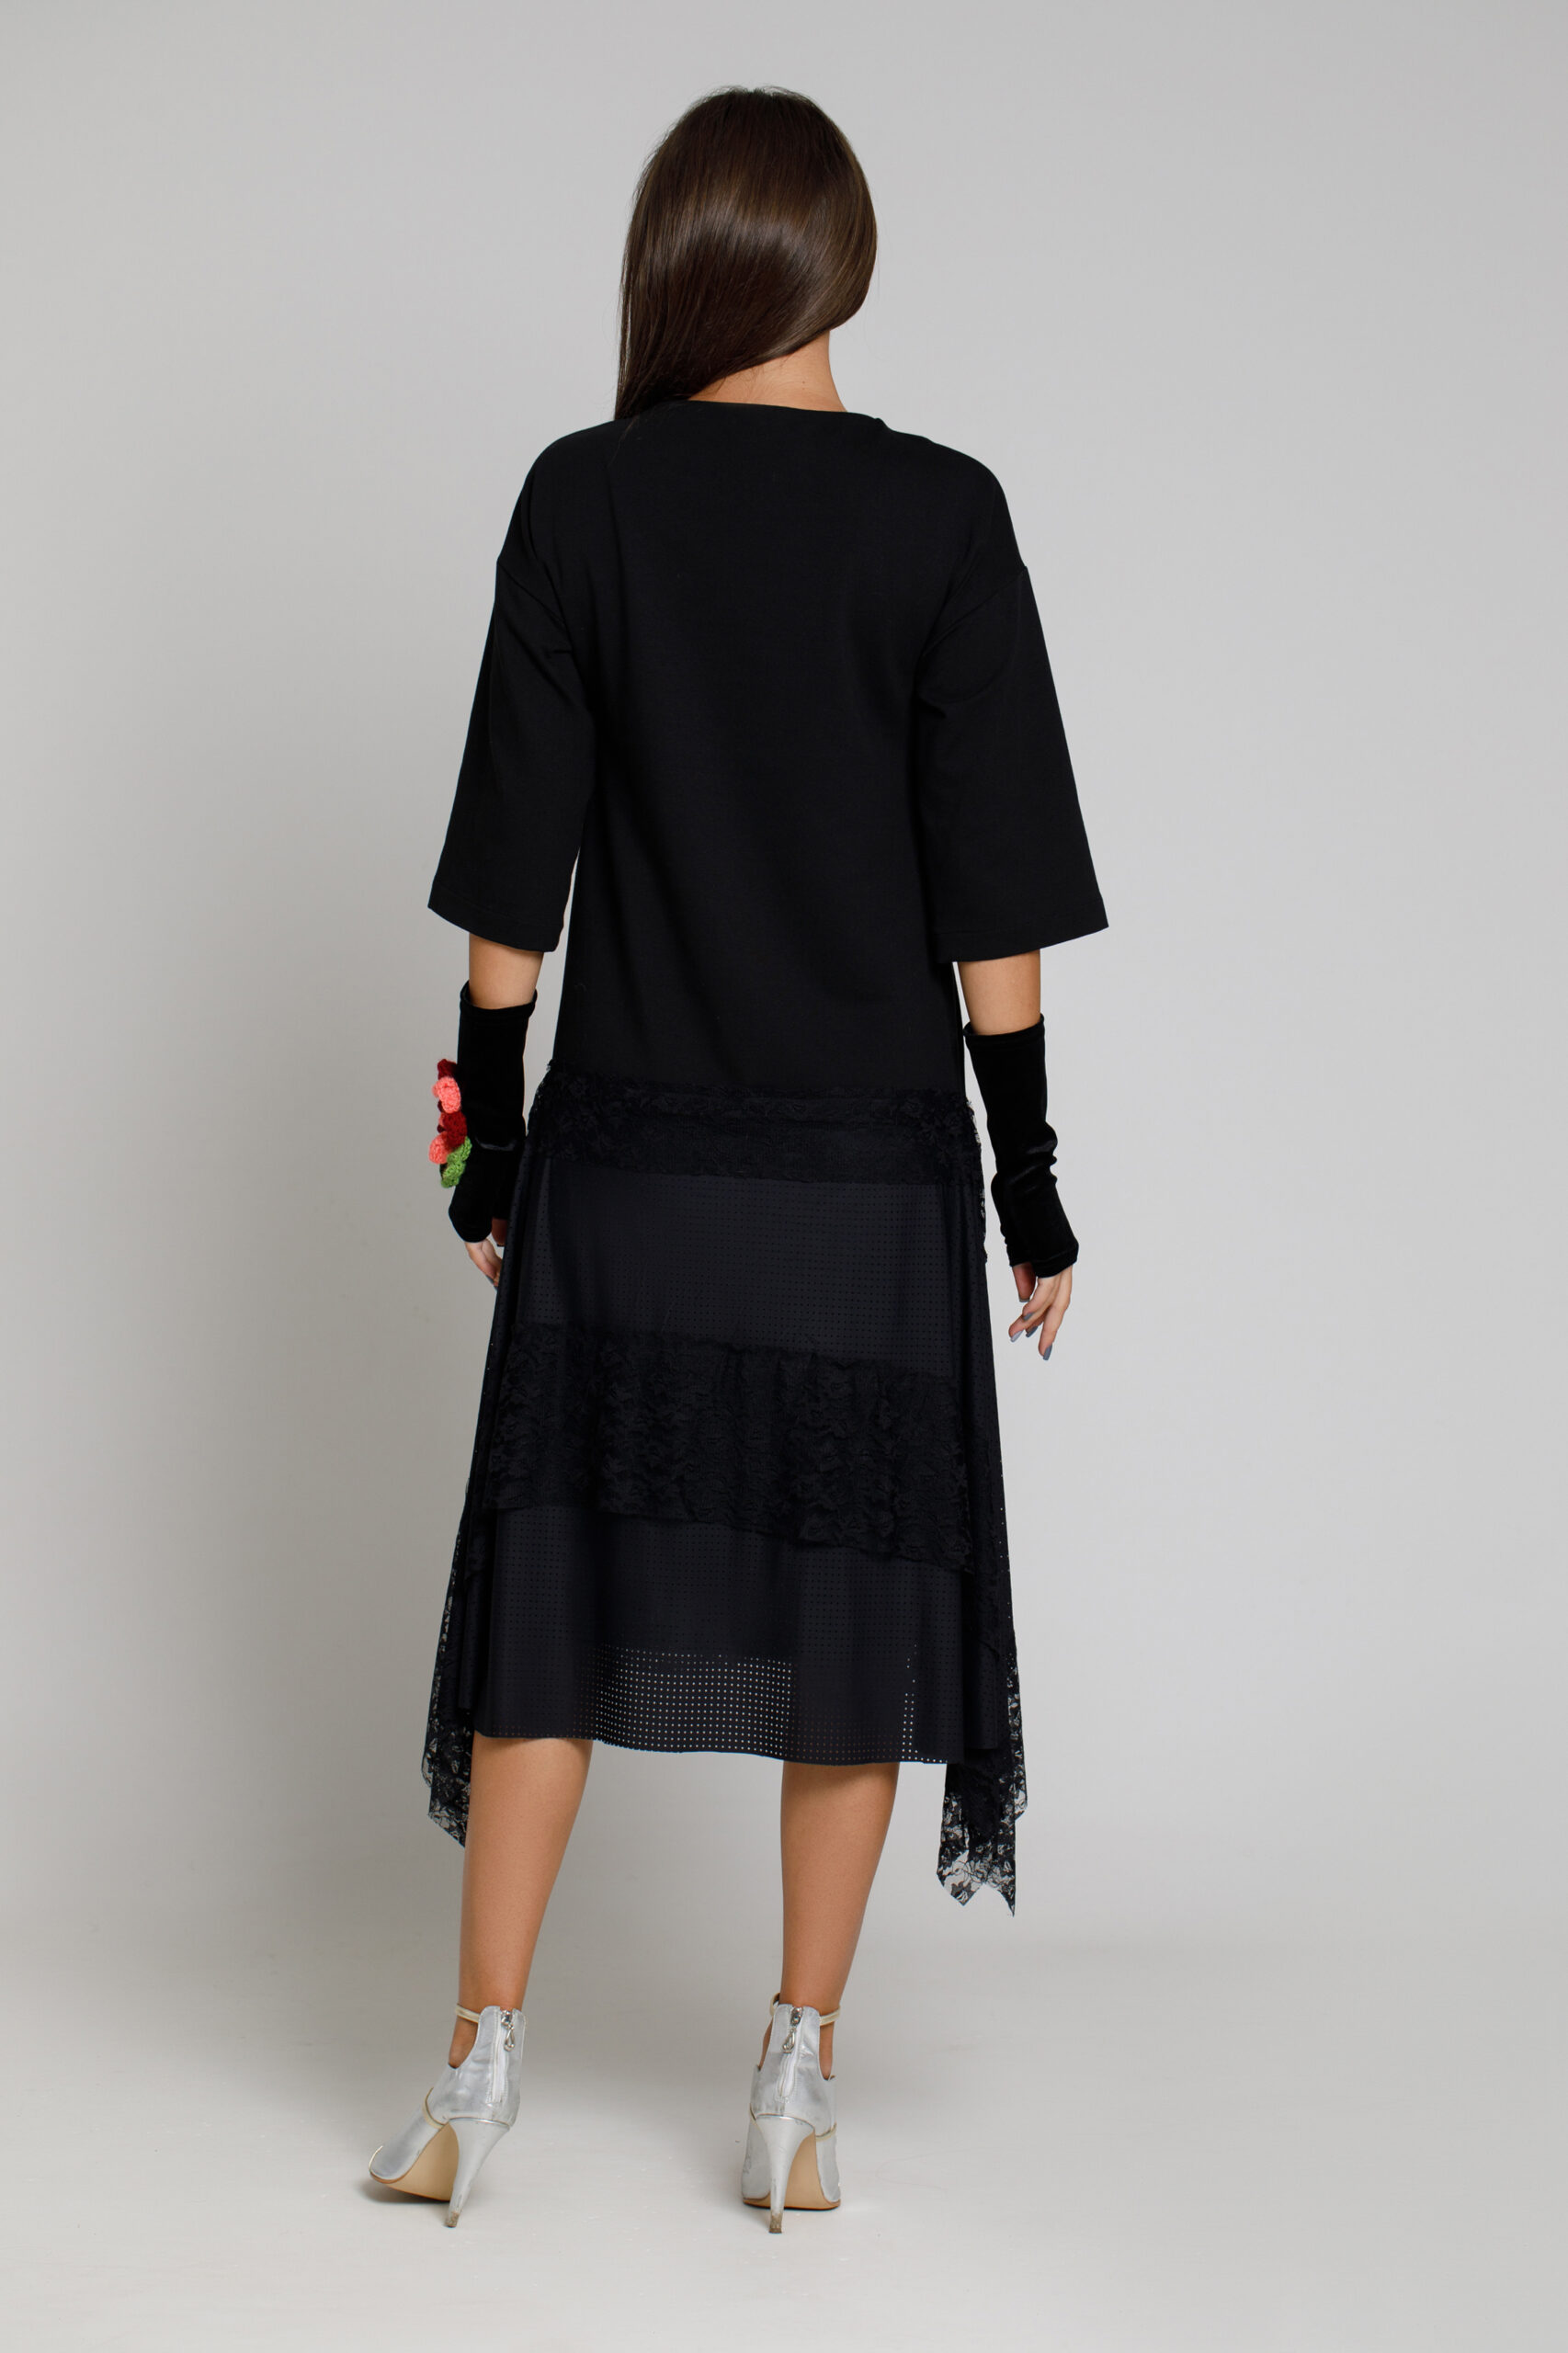 Rochie ALDA asimetrica neagra cu bordura din dantela. Materiale naturale, design unicat, cu broderie si aplicatii handmade